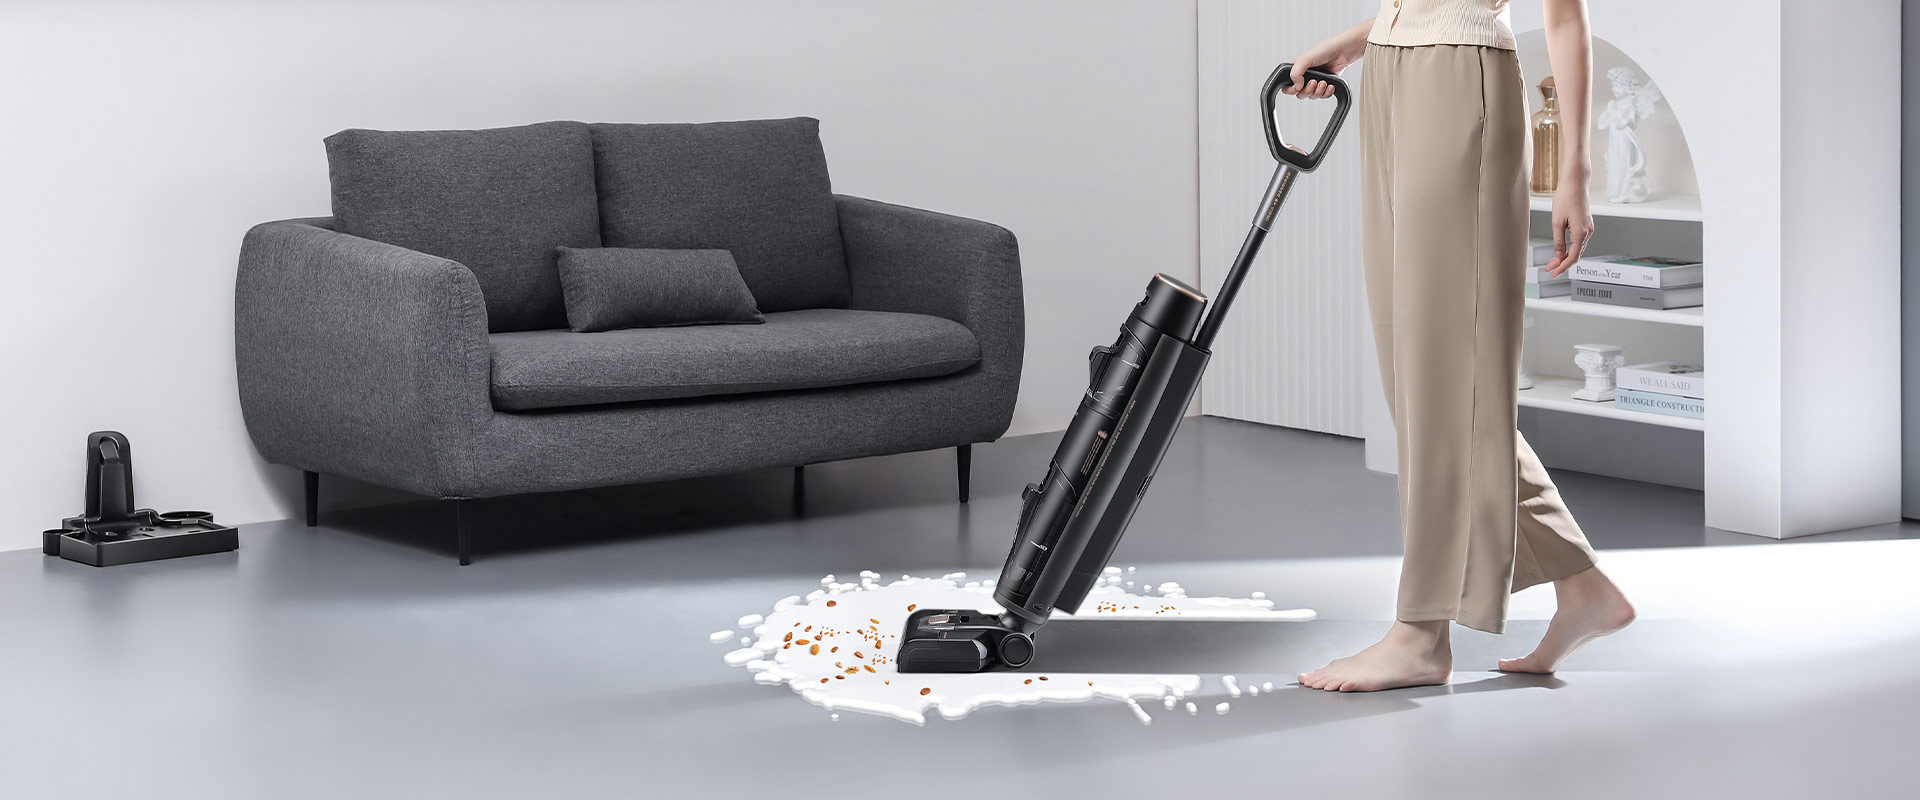 Viomi Cyber cordless wet dry vacuum mops